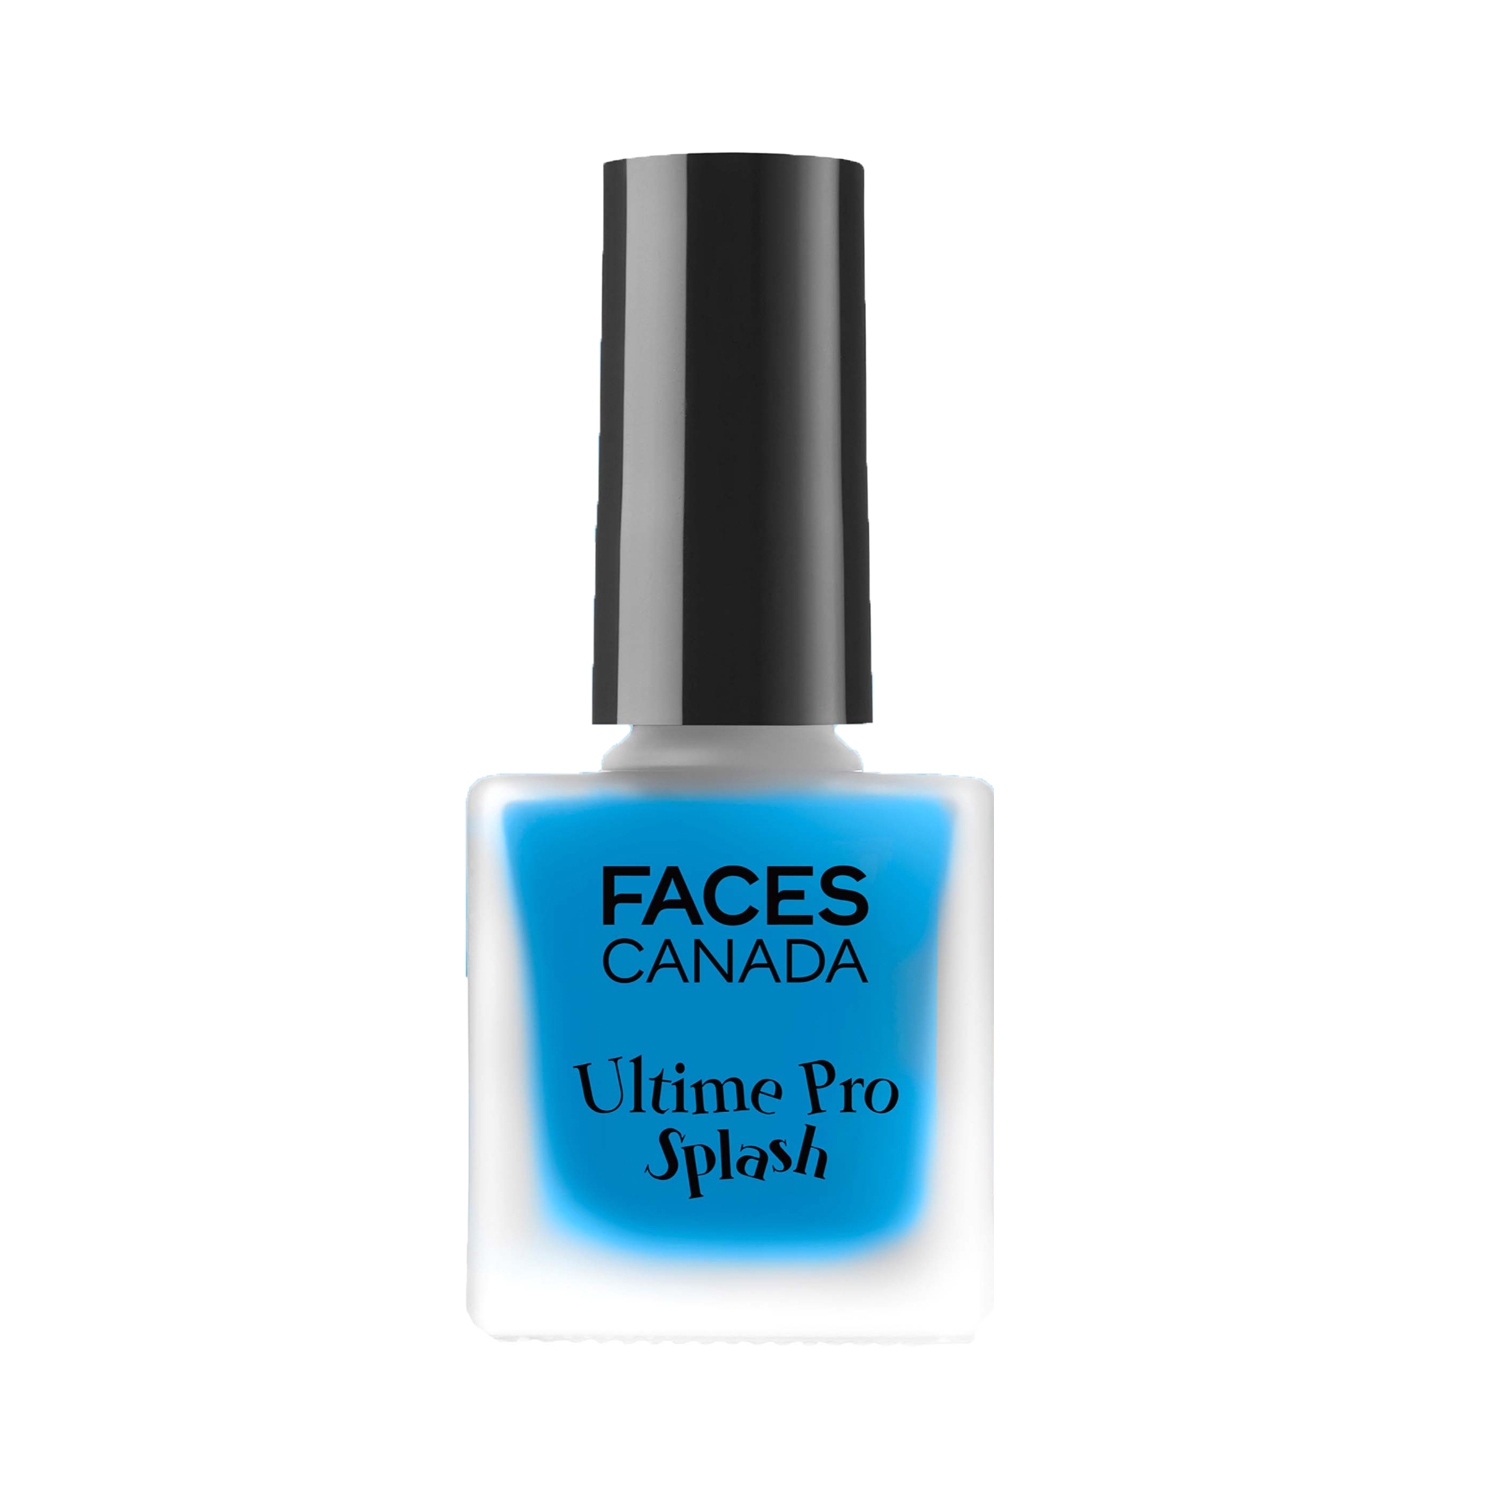 Faces Canada | Faces Canada Ultime Pro Splash Nail Enamel - M07 Moody Blue (8ml)